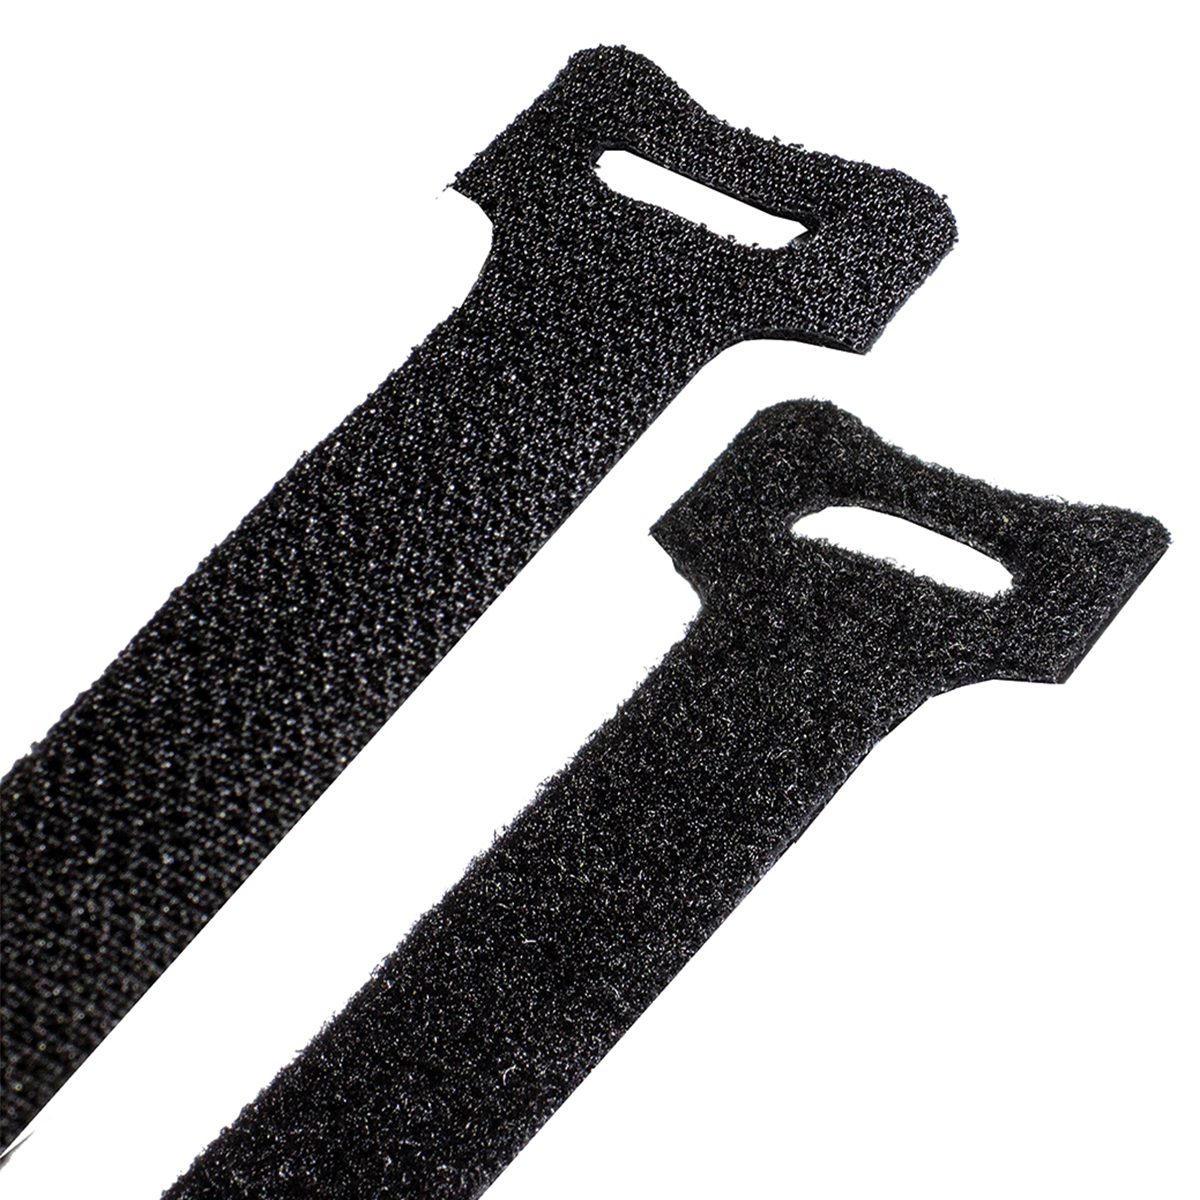 Velcro Straps. 5 straps